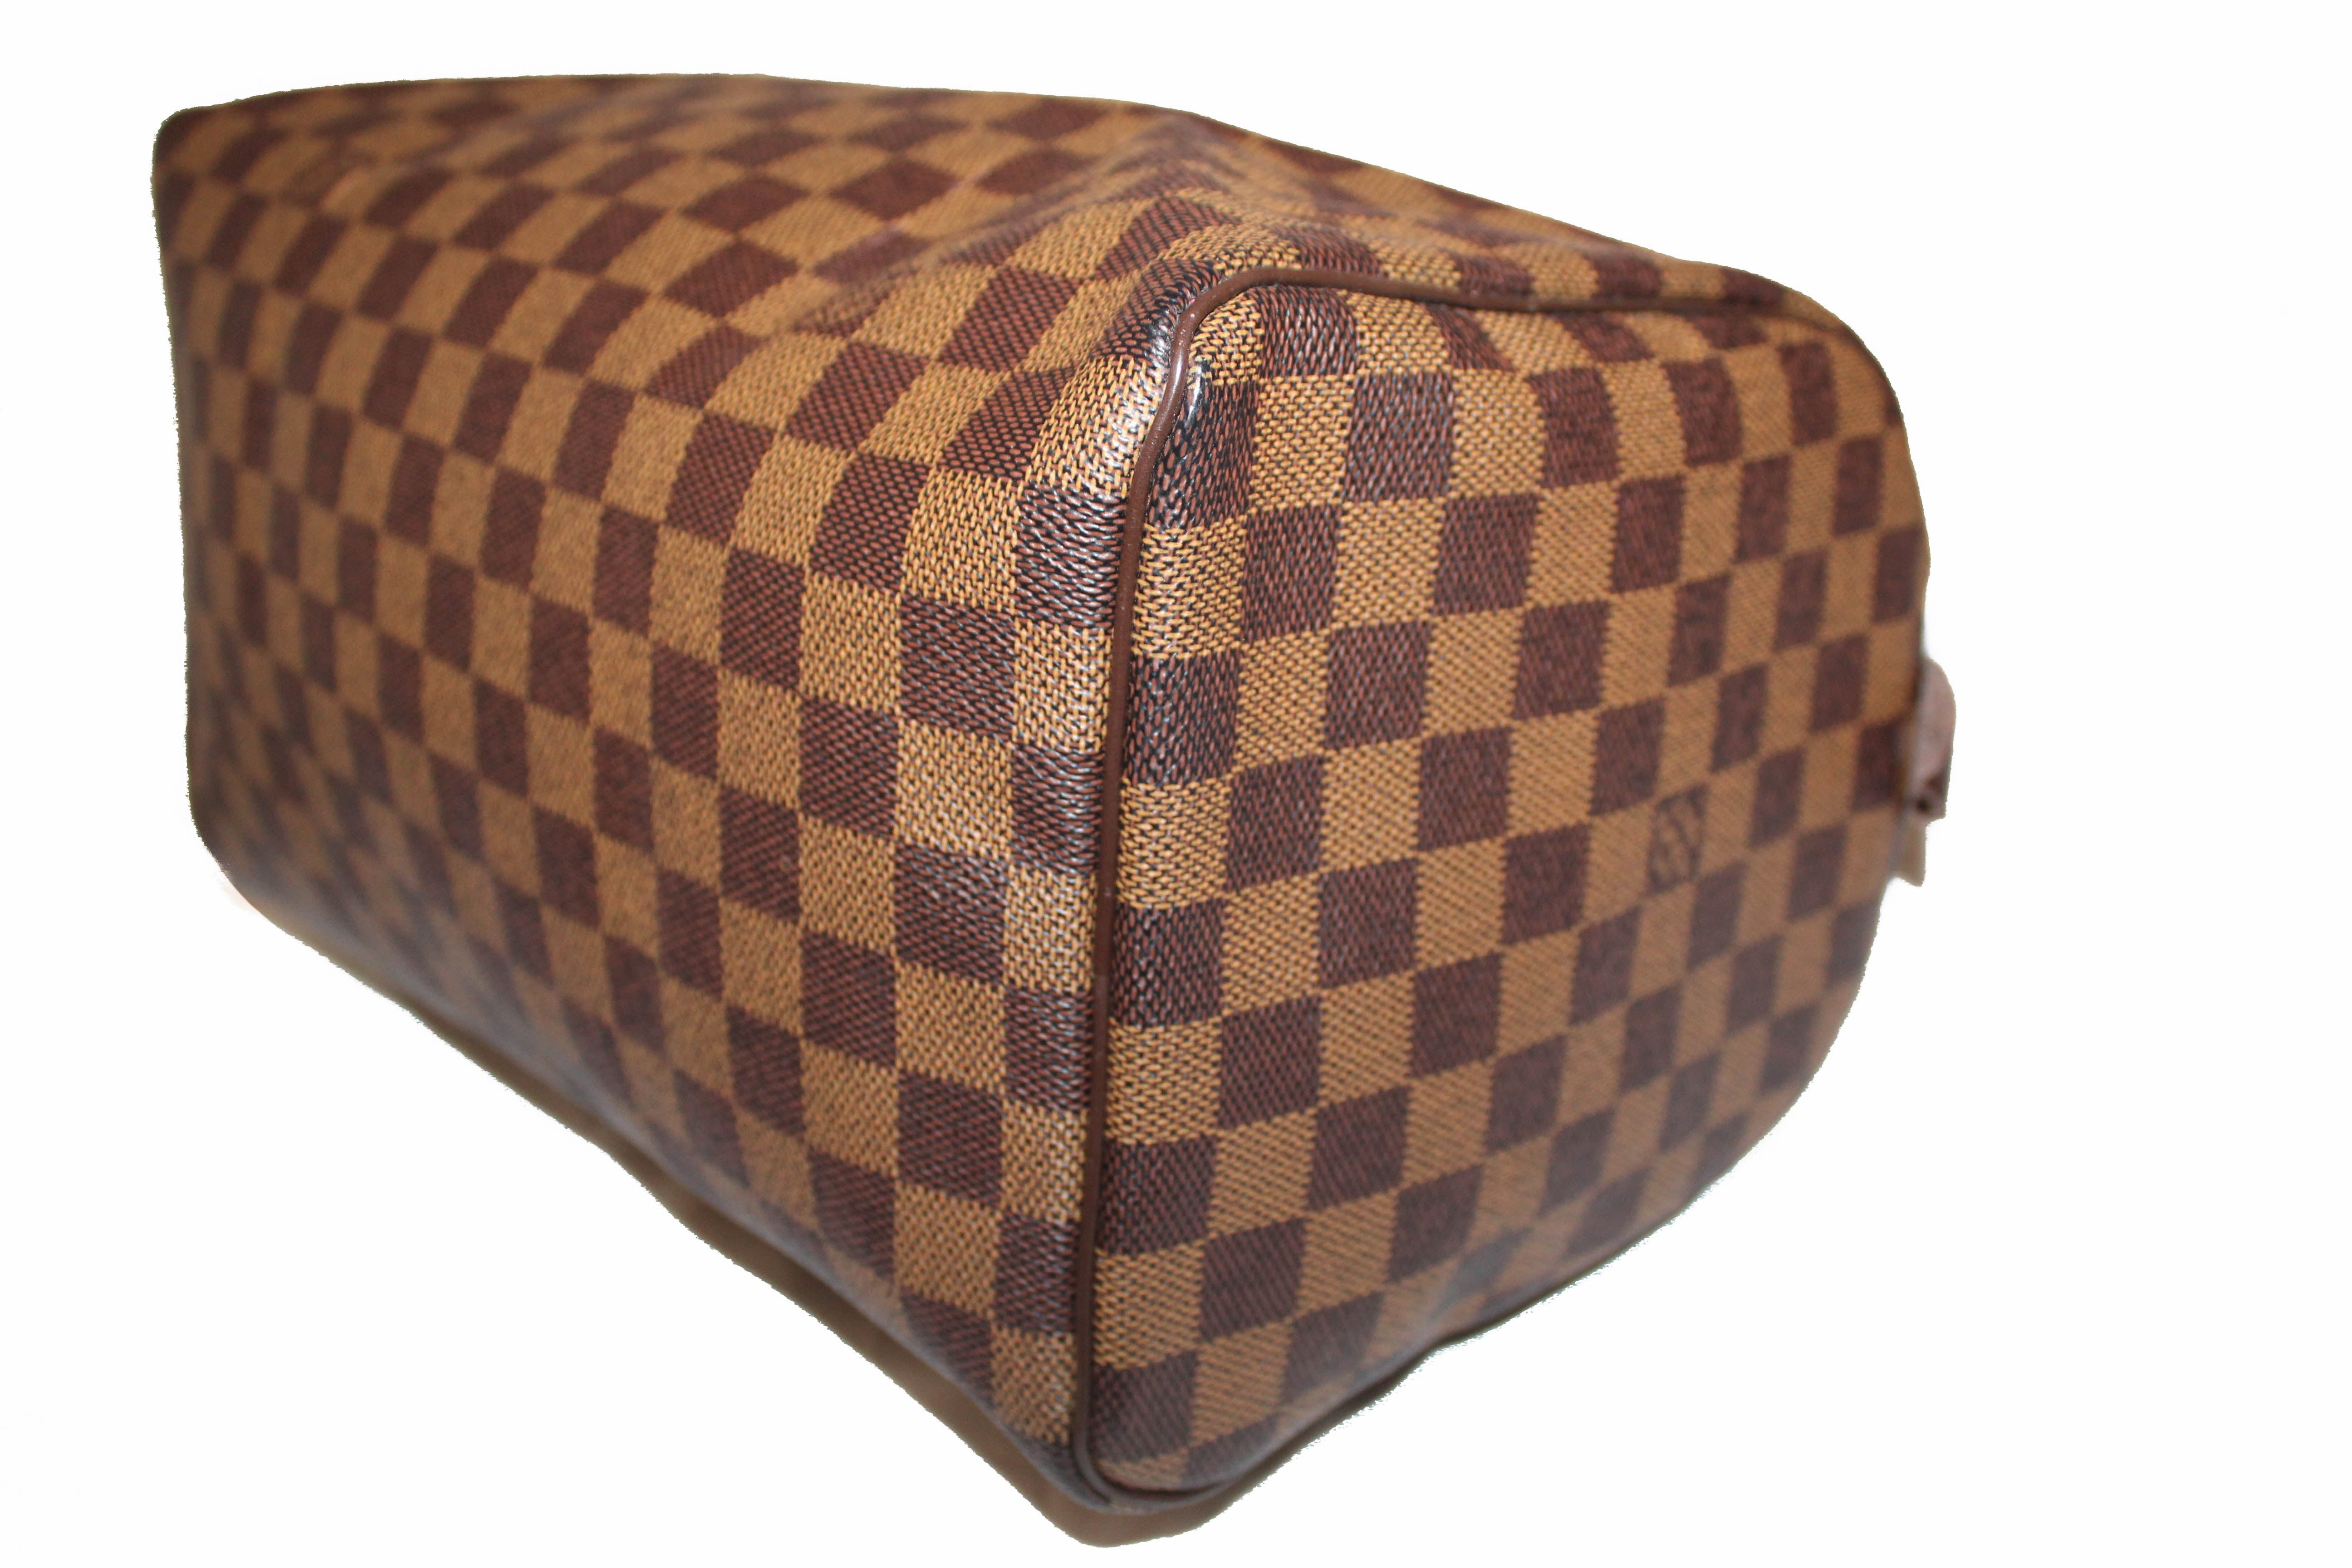 Authentic Louis Vuitton Damier Ebene Canvas Speedy 30 Handbag